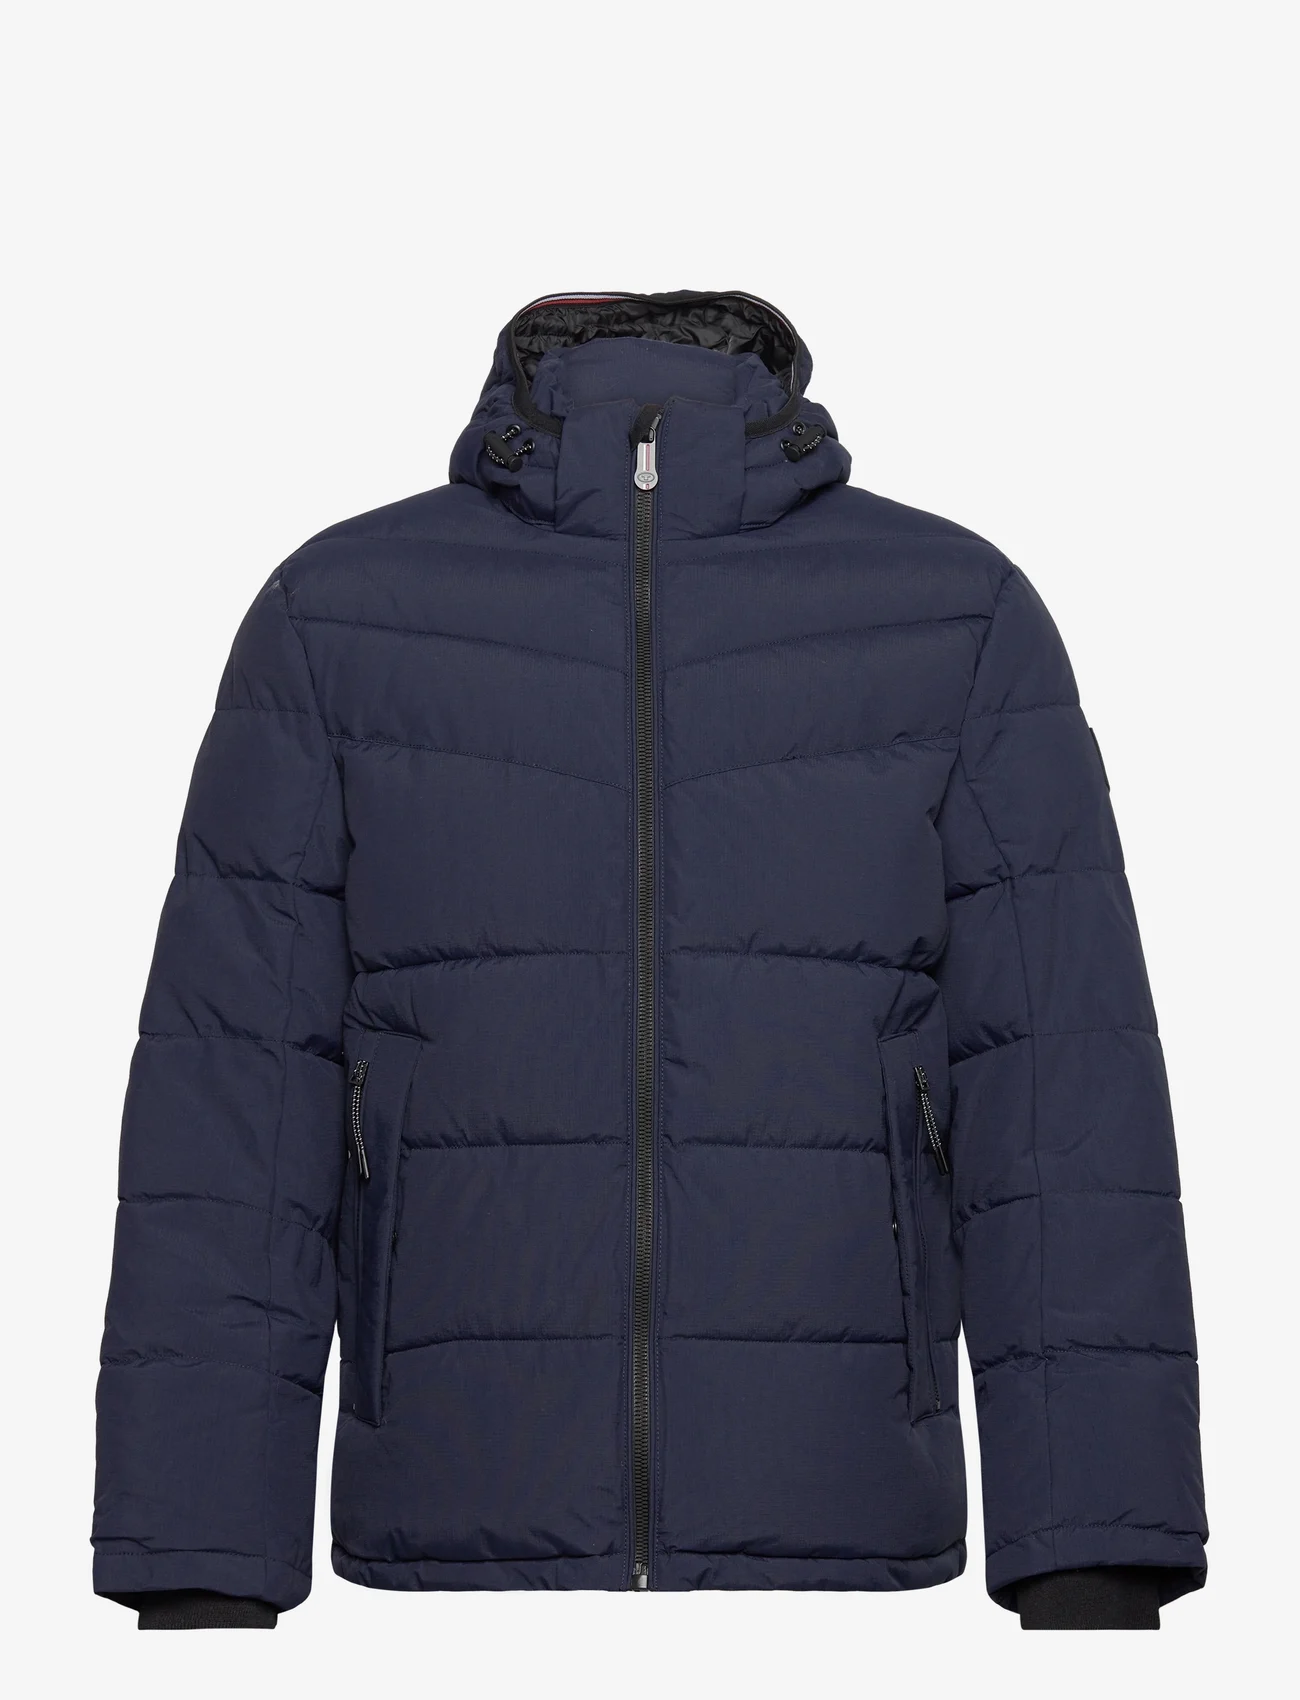 Tom Tailor - puffer jacket with hood - vinterjakker - sky captain blue - 0